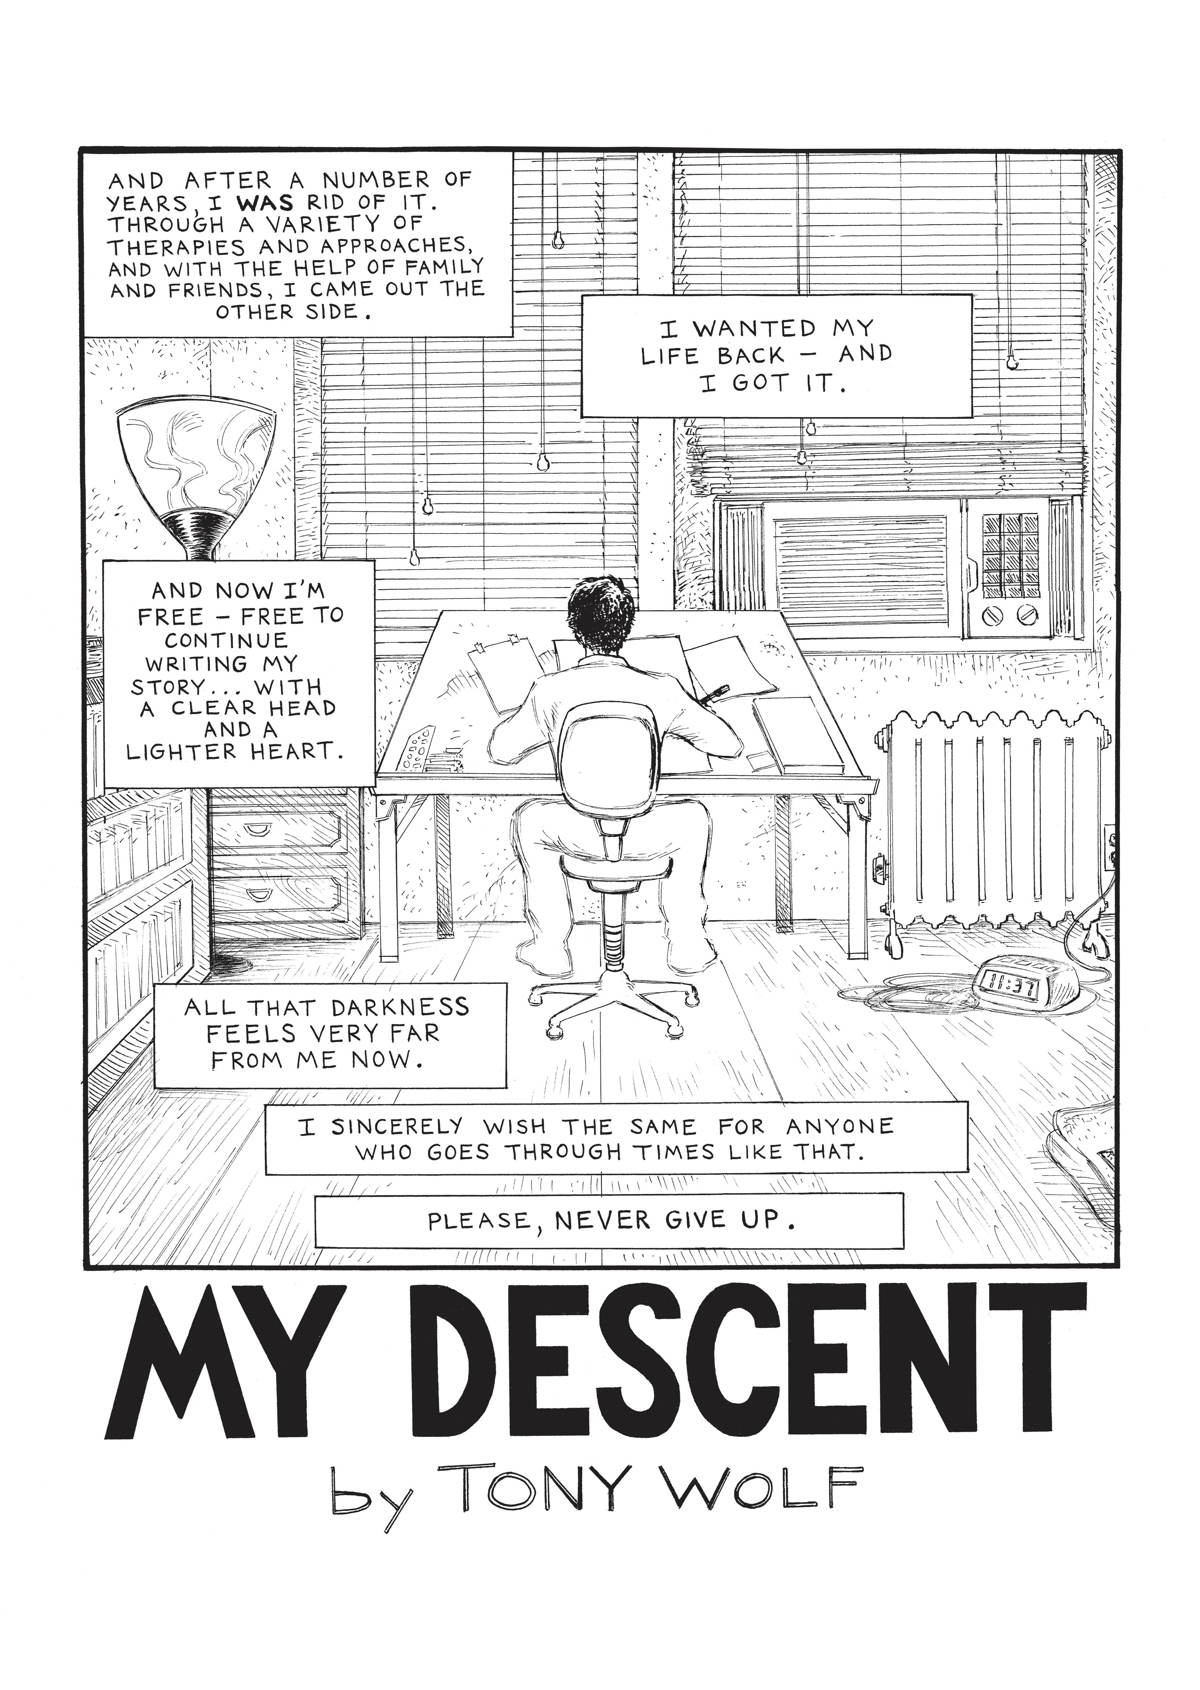 Tony Wolf Depression Comic p6 (1)